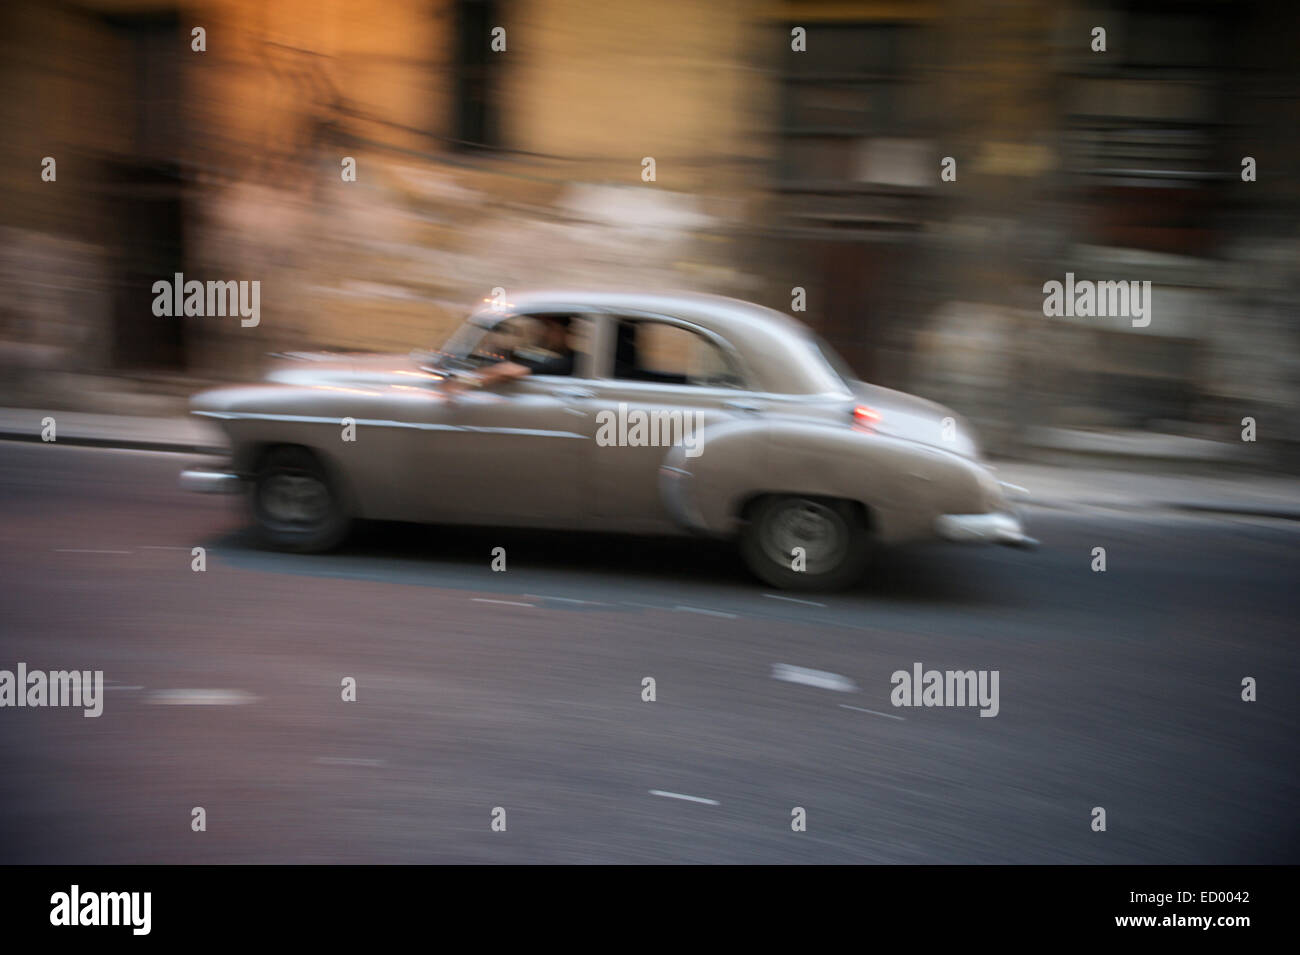 Scialbo marrone vintage americano auto taxi guida su Havana Cuba street passando in motion blur Foto Stock